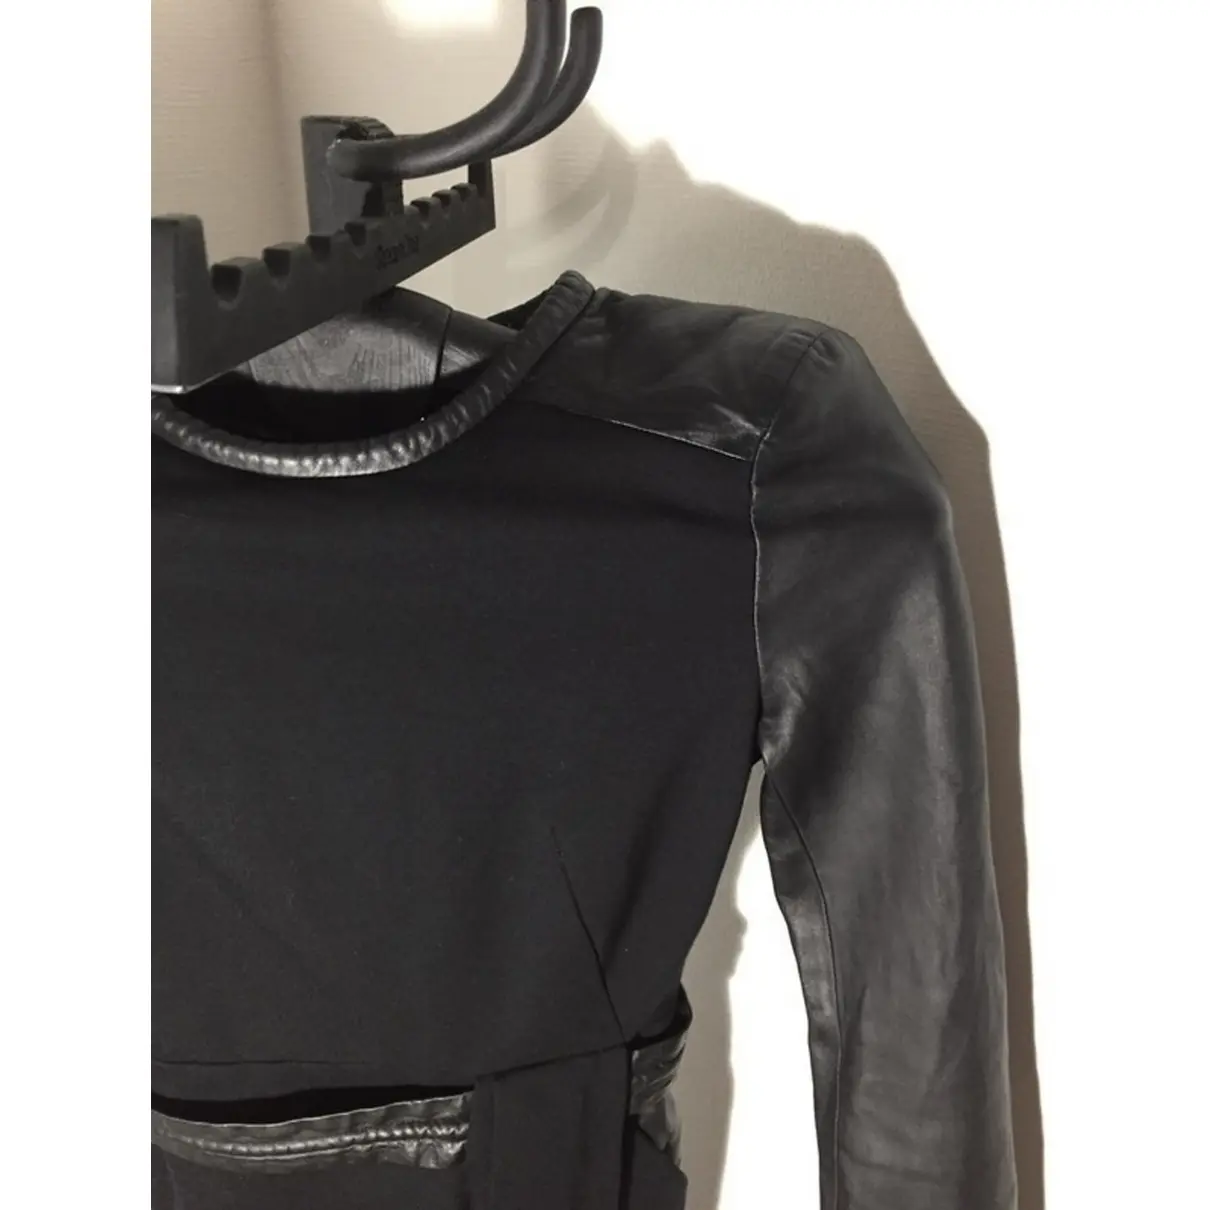 Buy The Kooples Leather dress online